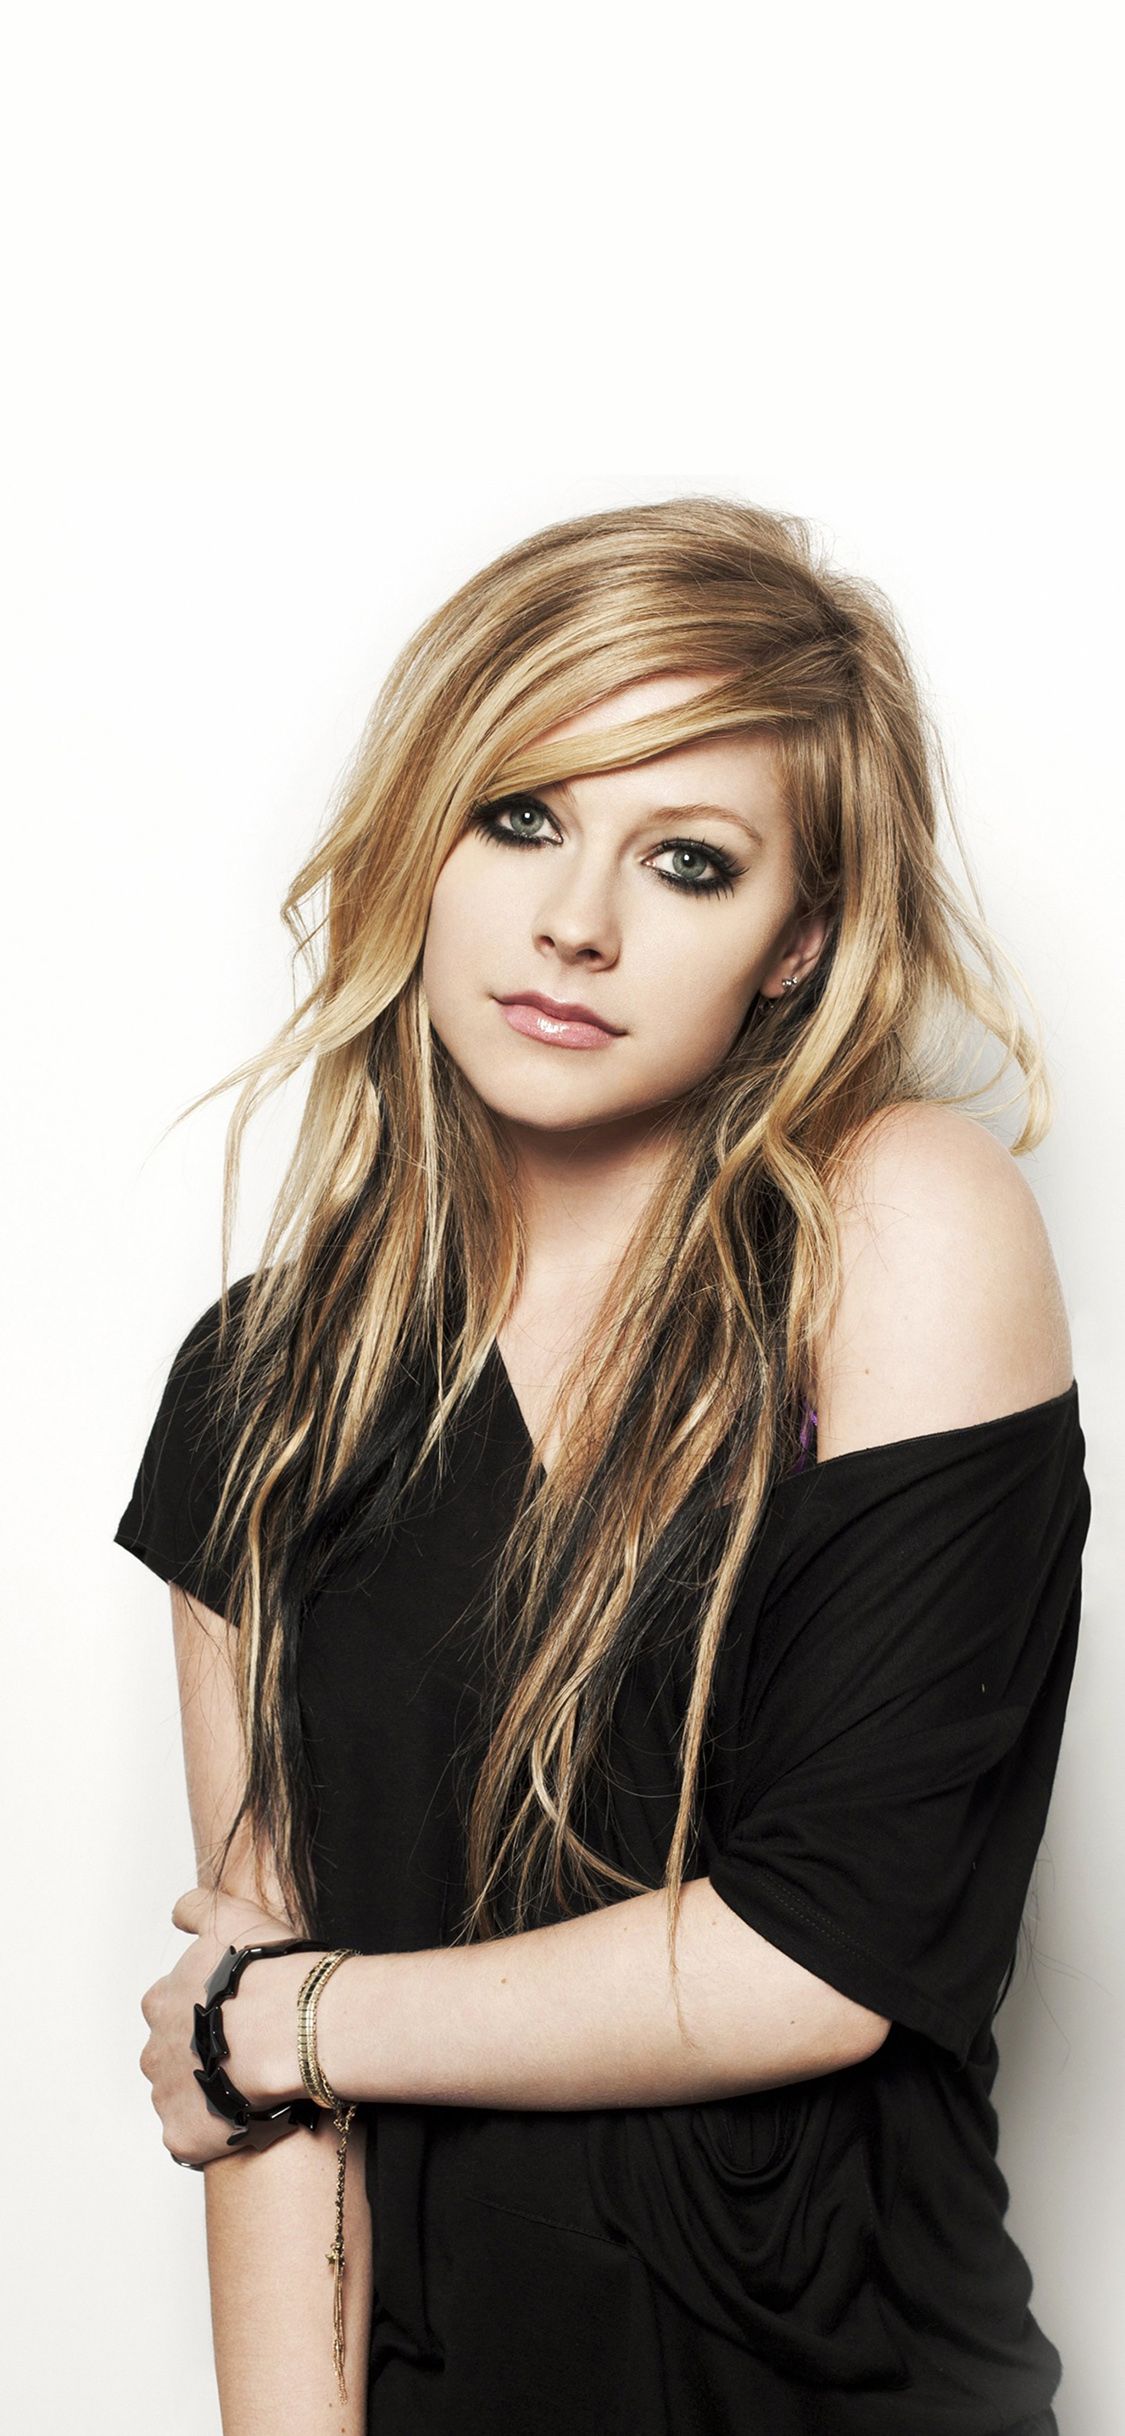 Avril Lavigne Music Star Beauty